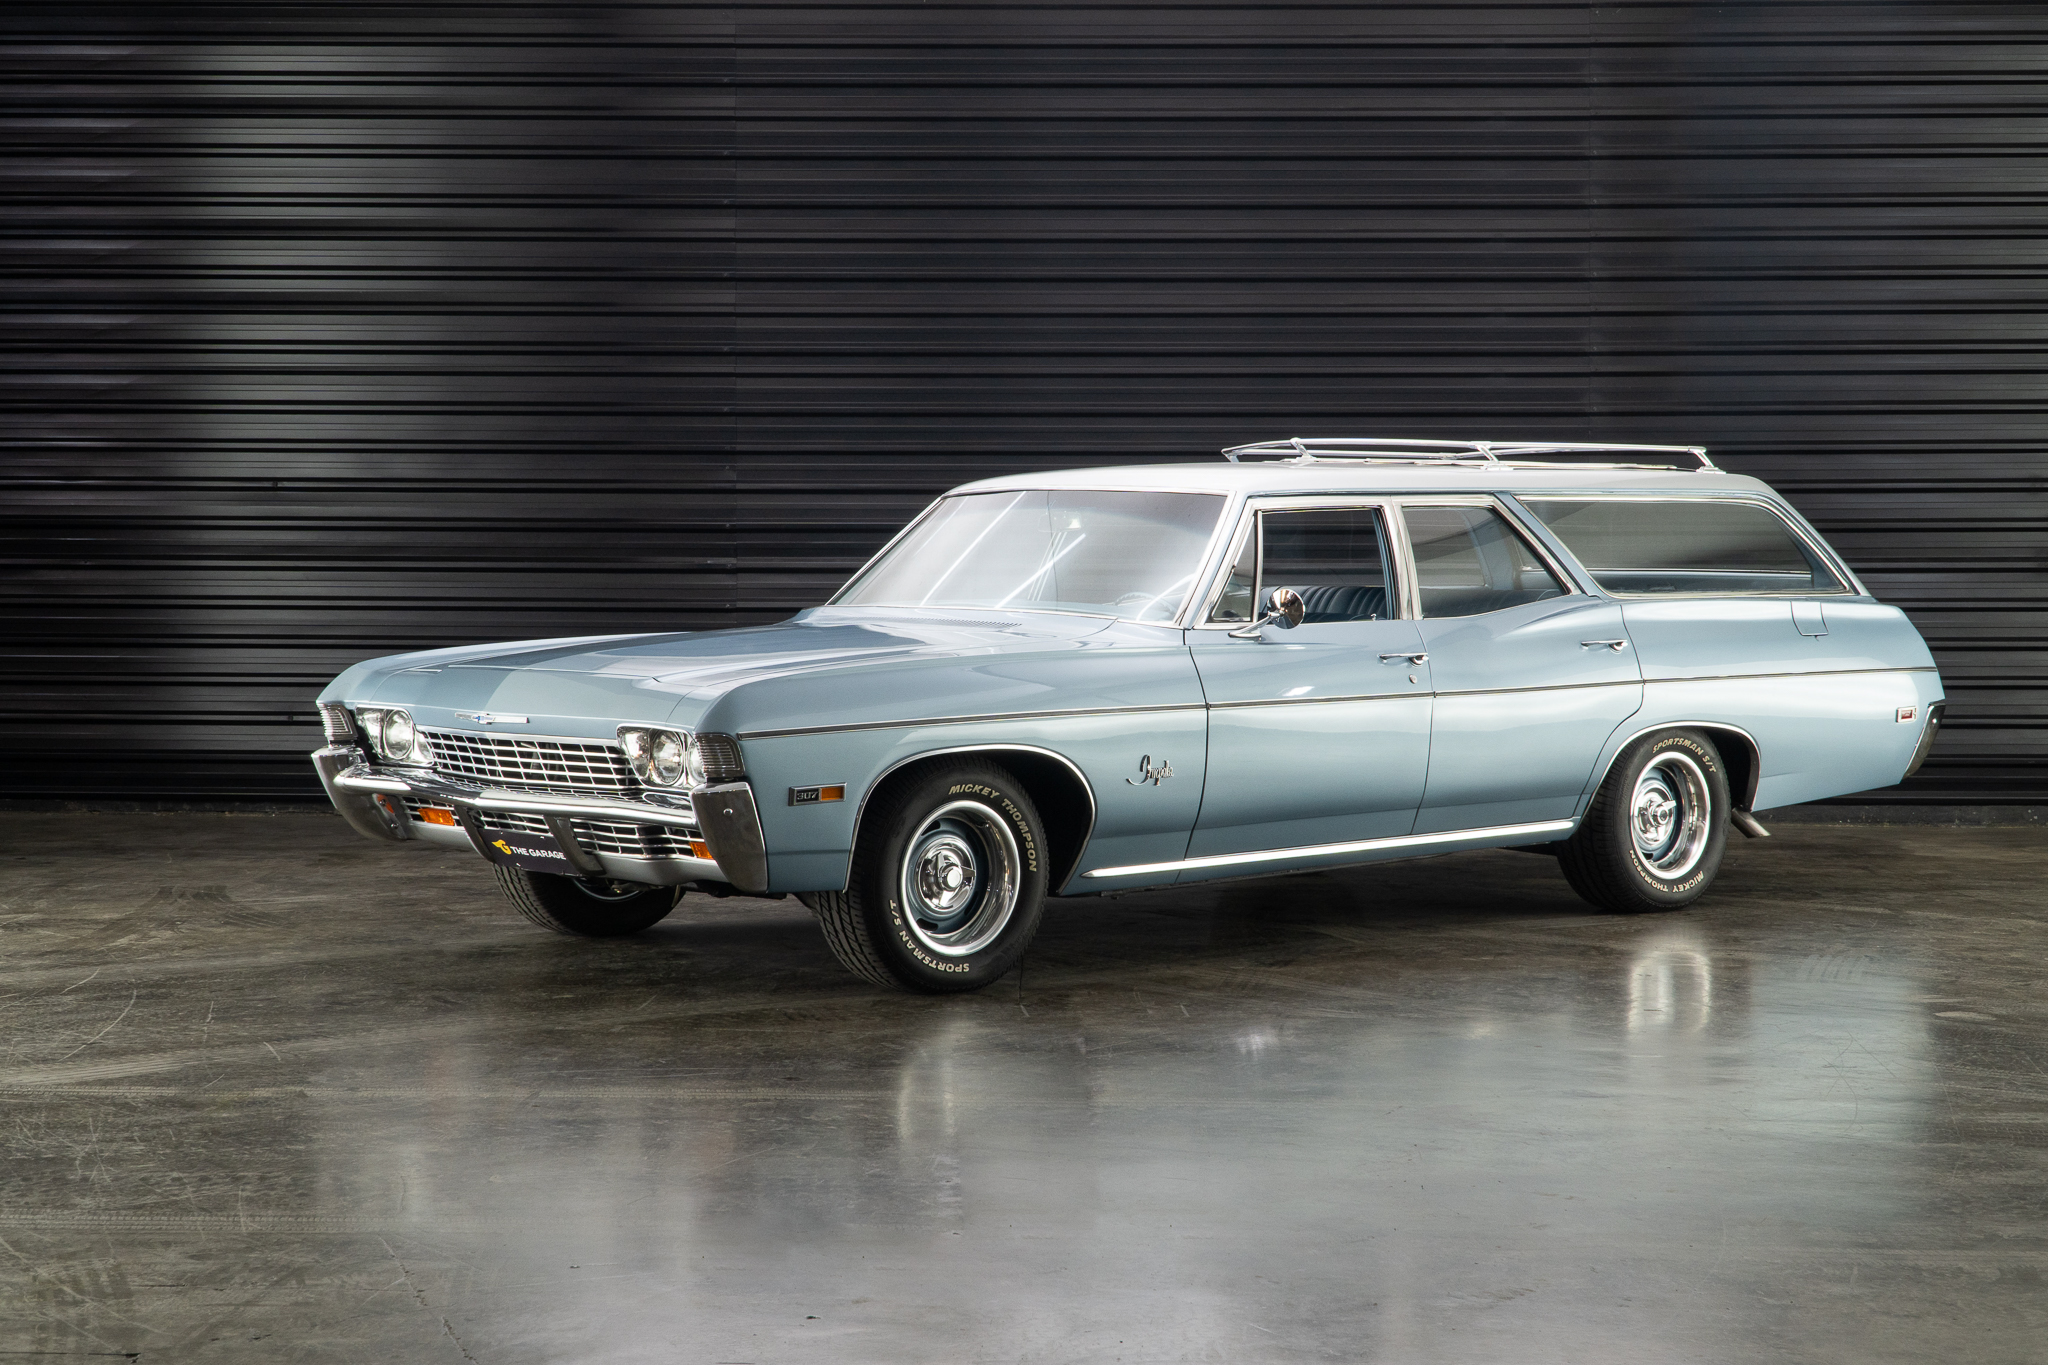 1968 Chevrolet Impala Wagon a venda the garage for sale